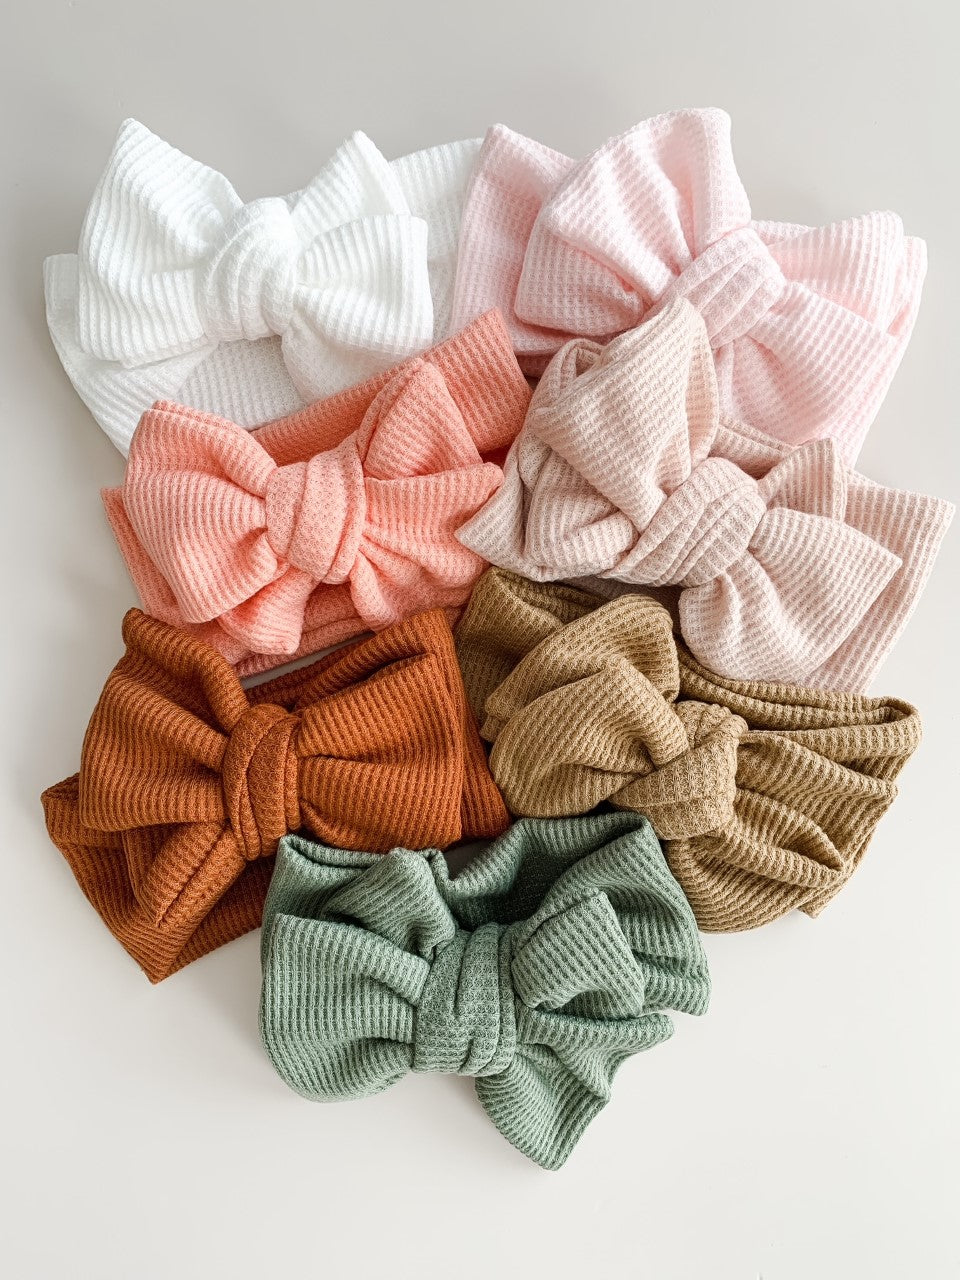 topknot baby girl oversized bow headband white pink beige green brown tan orange